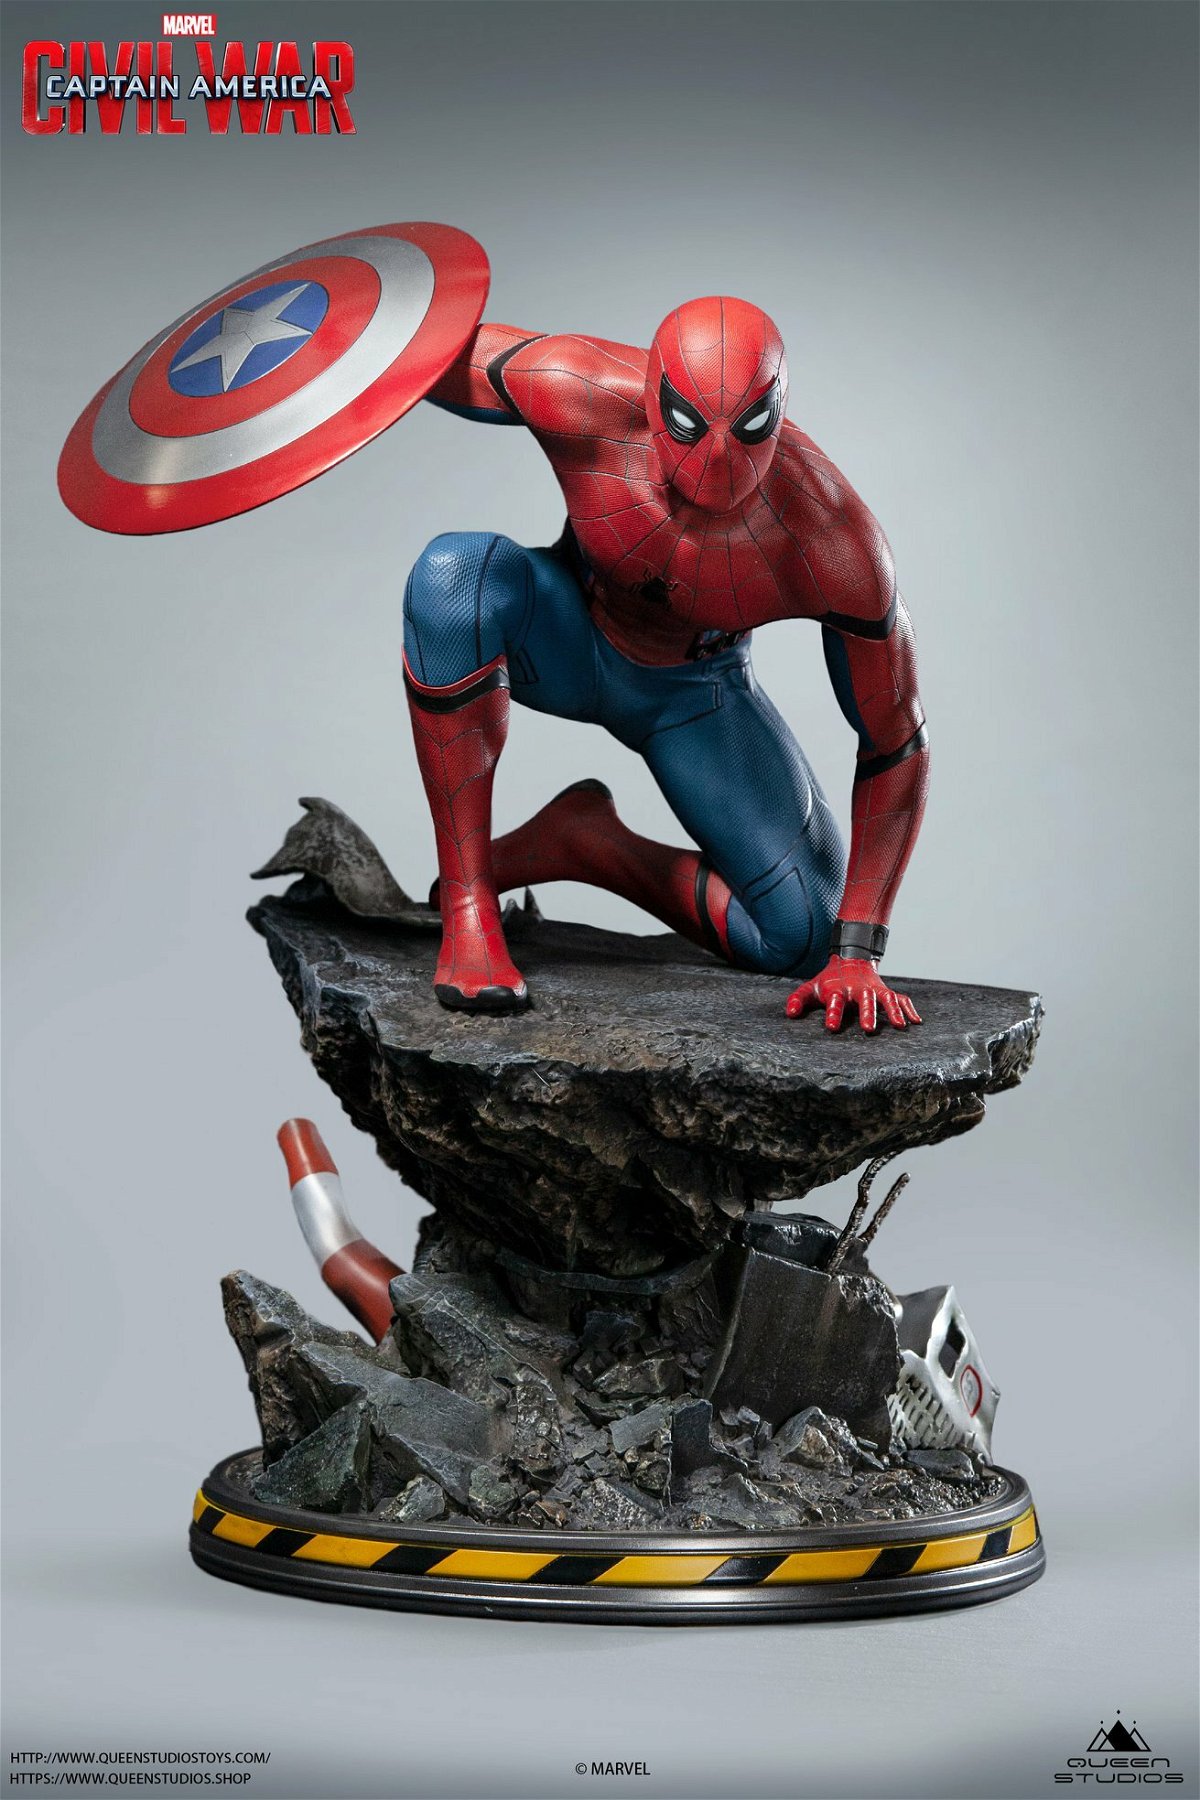 Spider-Man: Queen Studios presenta la statua da Civil War